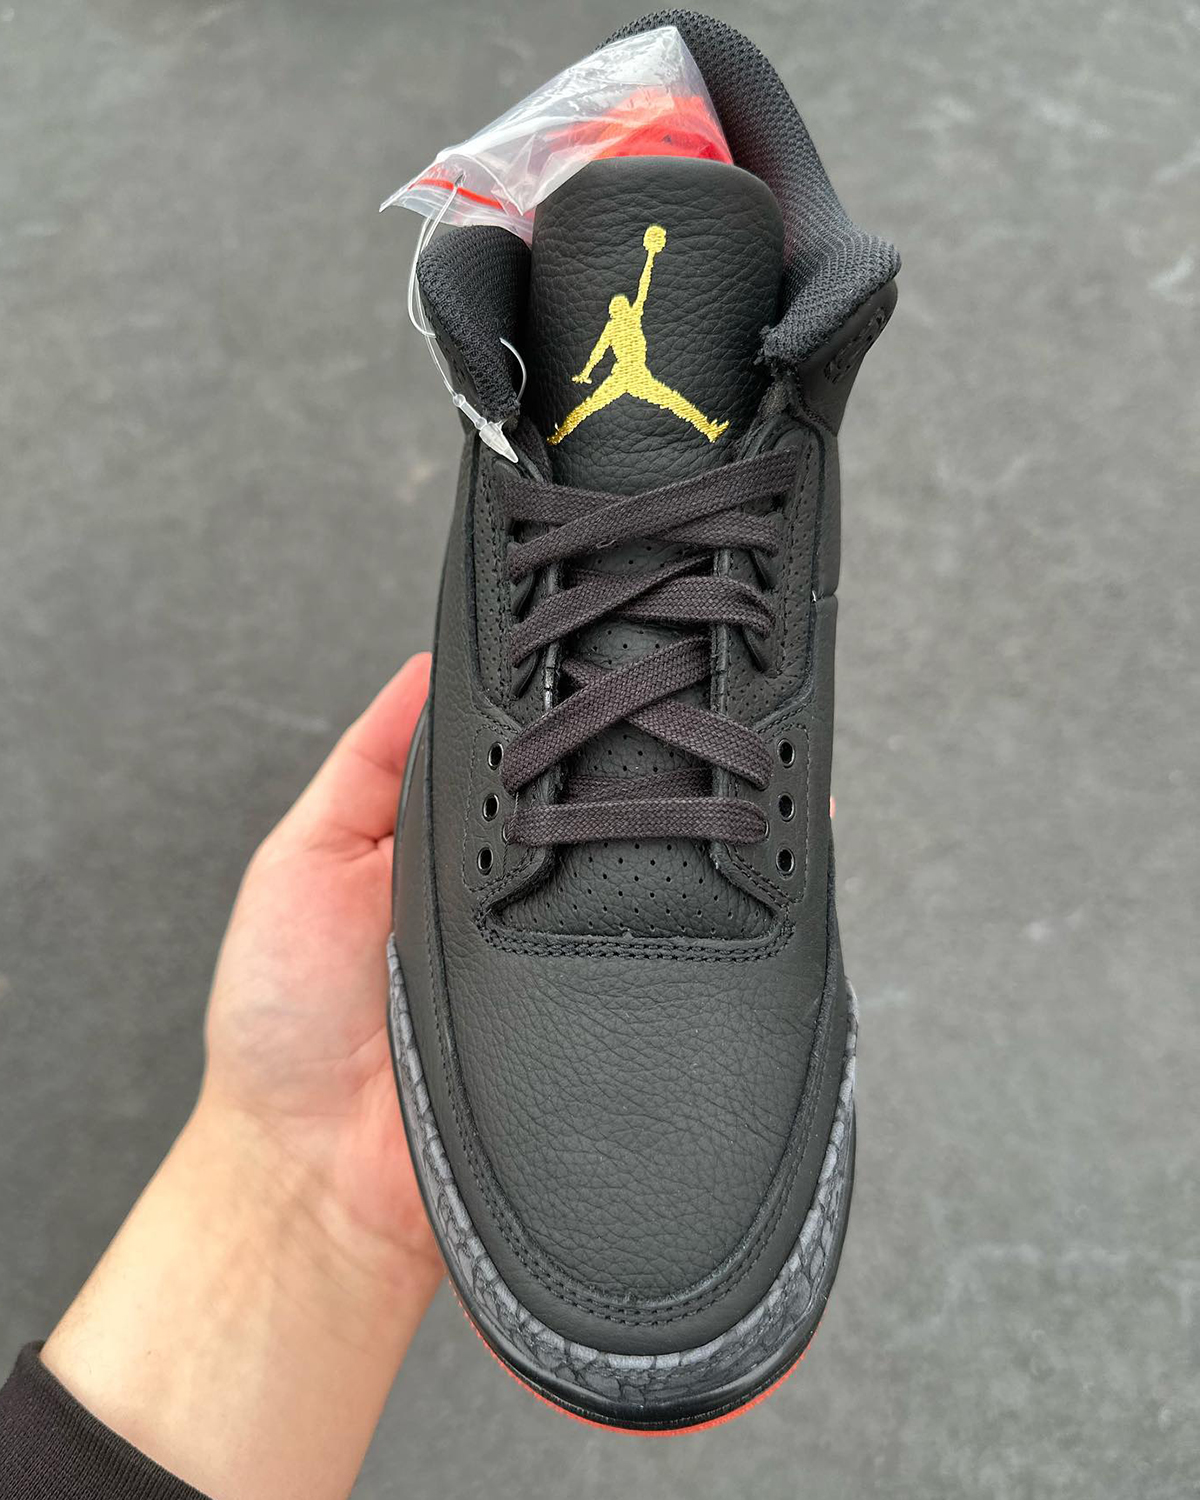 jordan xxx 1 sneakers "Patent Bred" Release Date 10